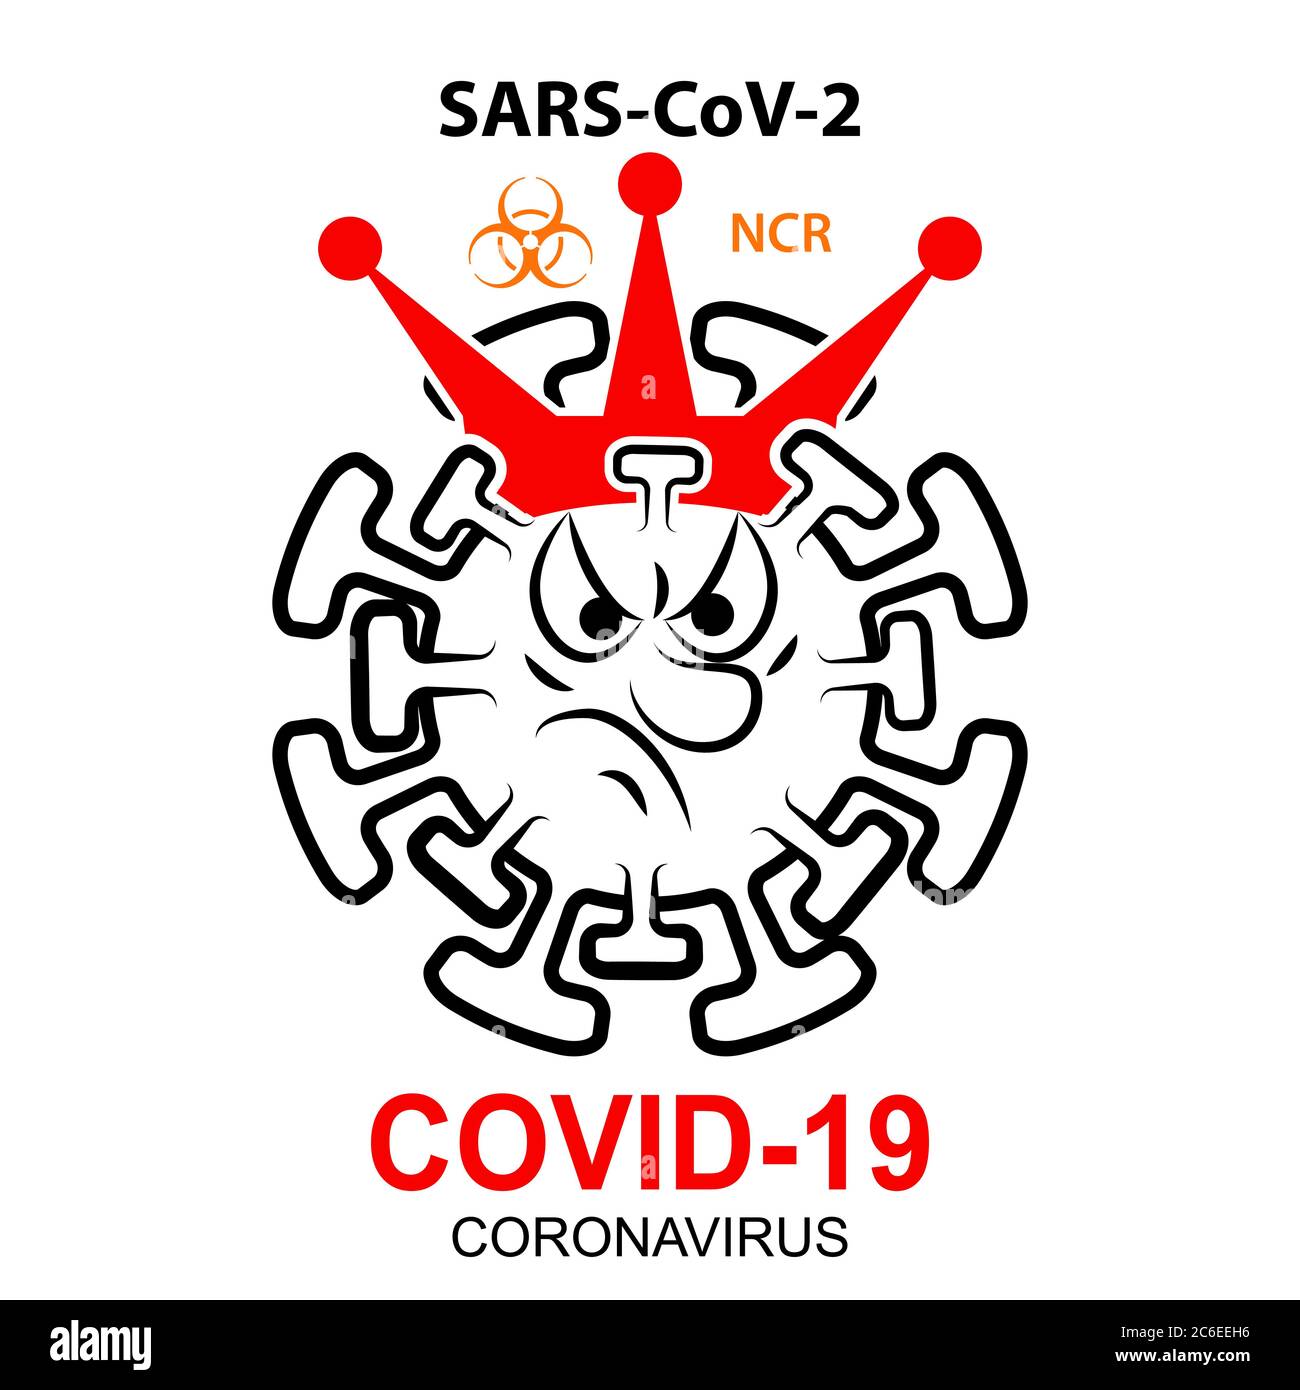 Coronavirus SARS-CoV-2 with crown. Hand drawing sketch of virus causing pneumonia. Vector illustration Stock Vector